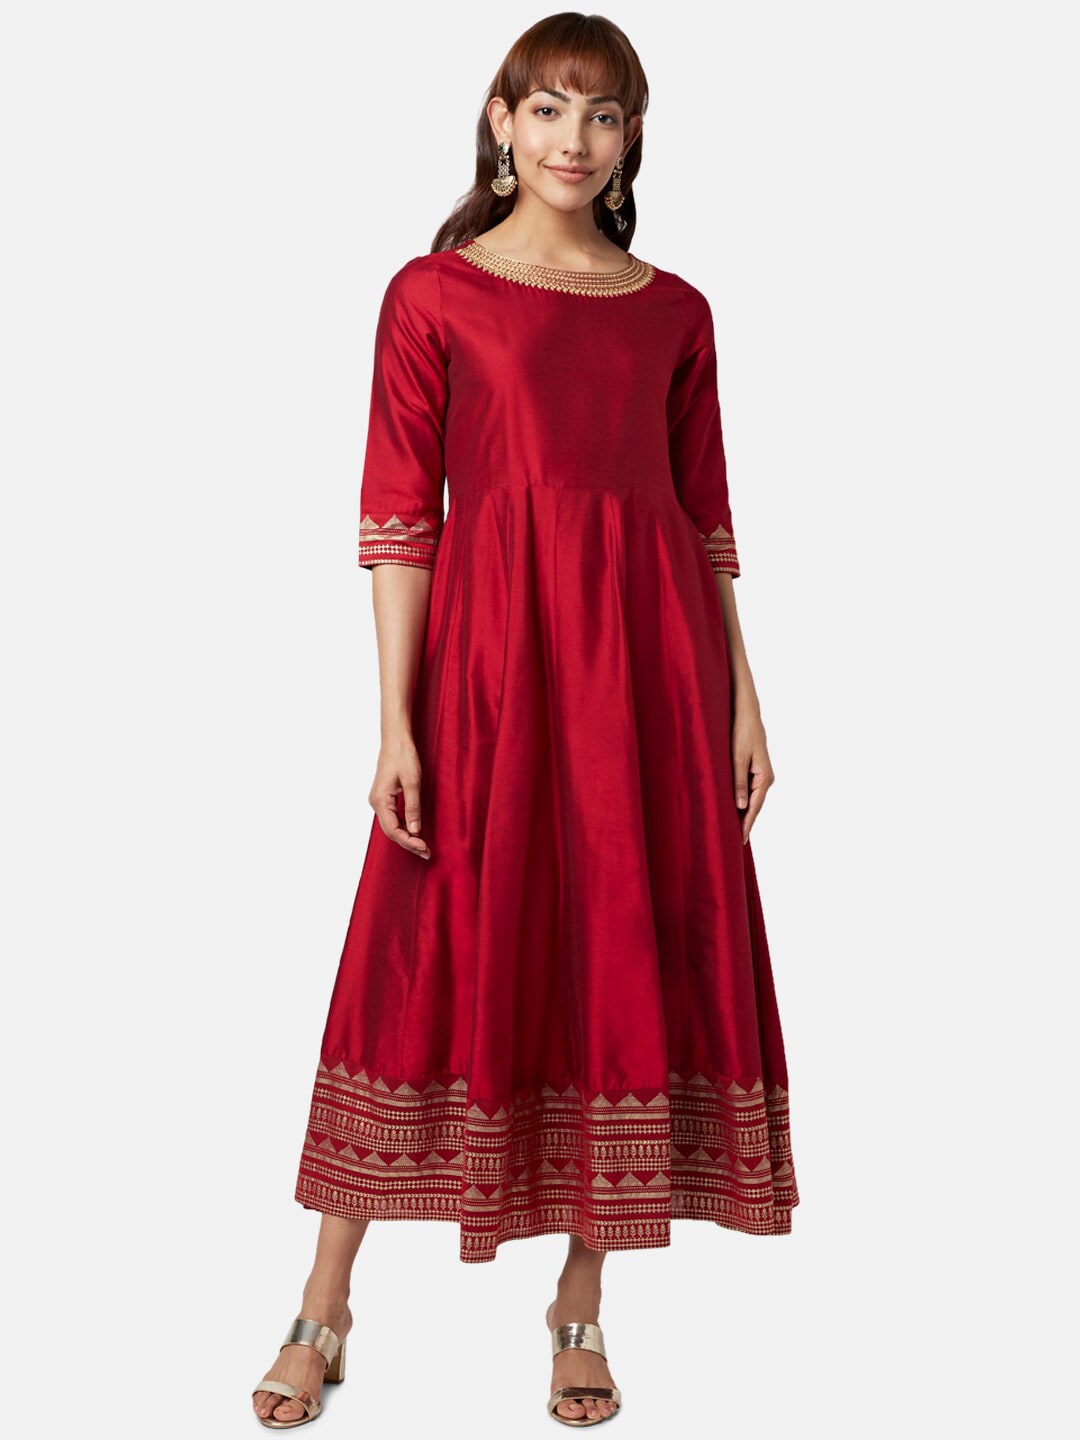 RANGMANCH BY PANTALOONS Ethnic Motifs Ethnic Midi Dress Price in India